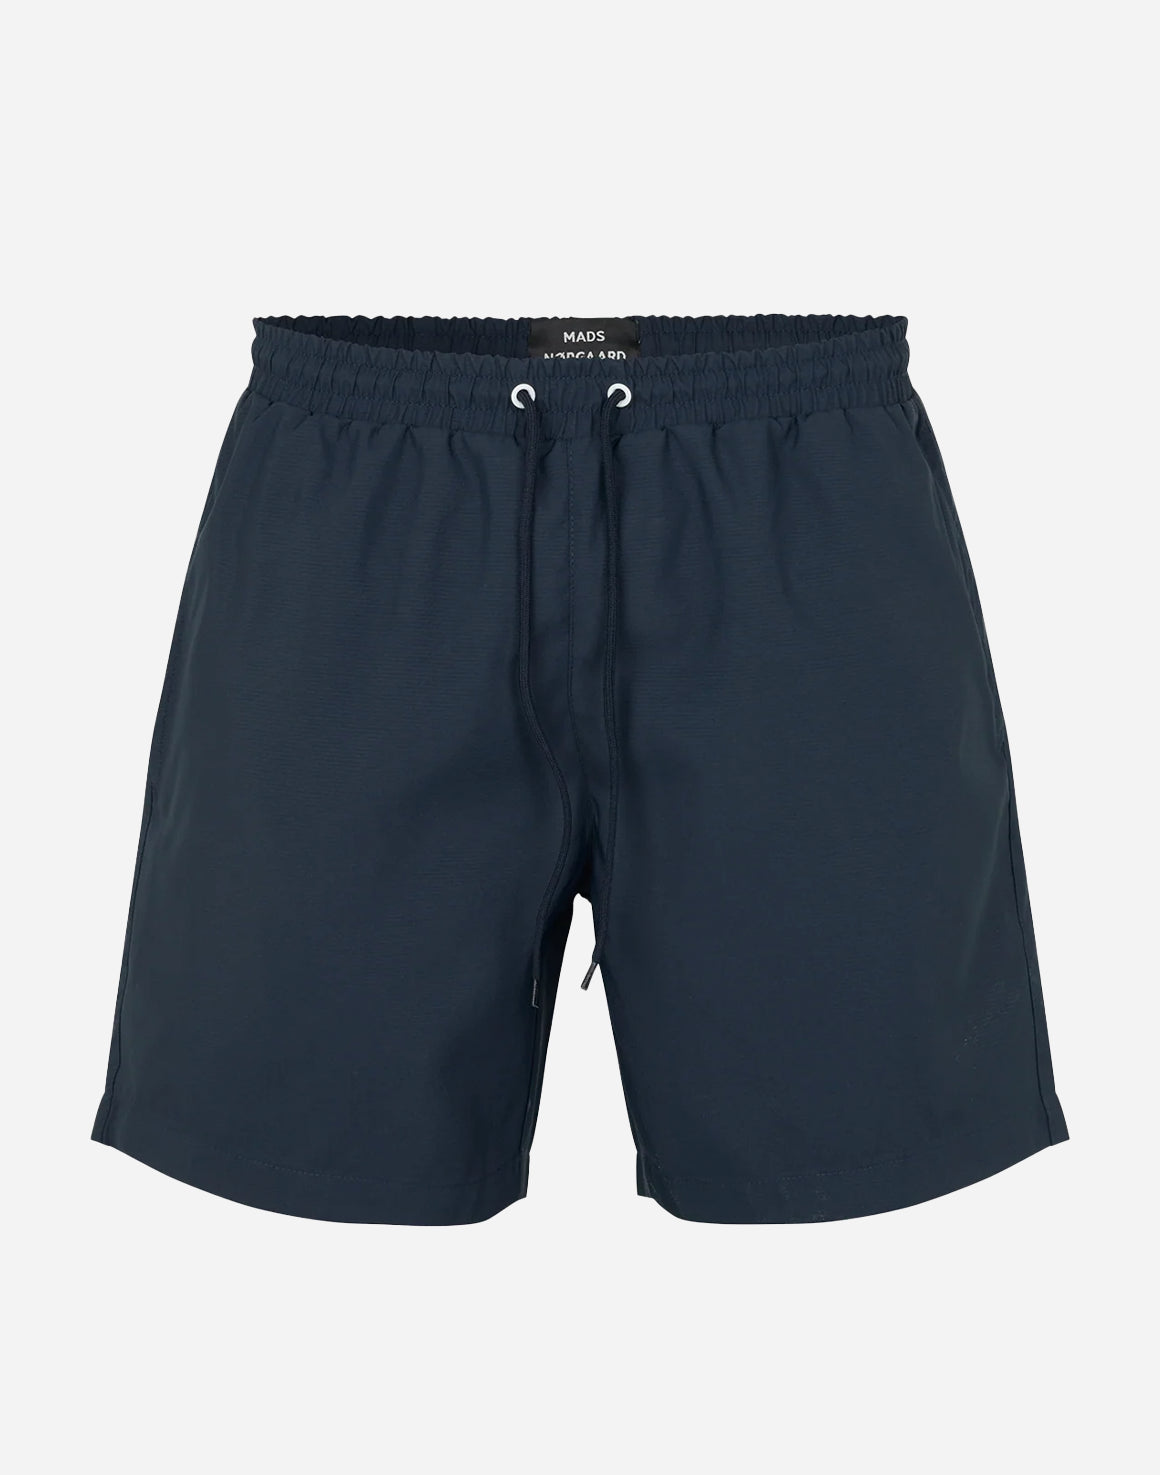 Sea sandro shorts - Navy - Mads Nørgaard - Kul og Koks